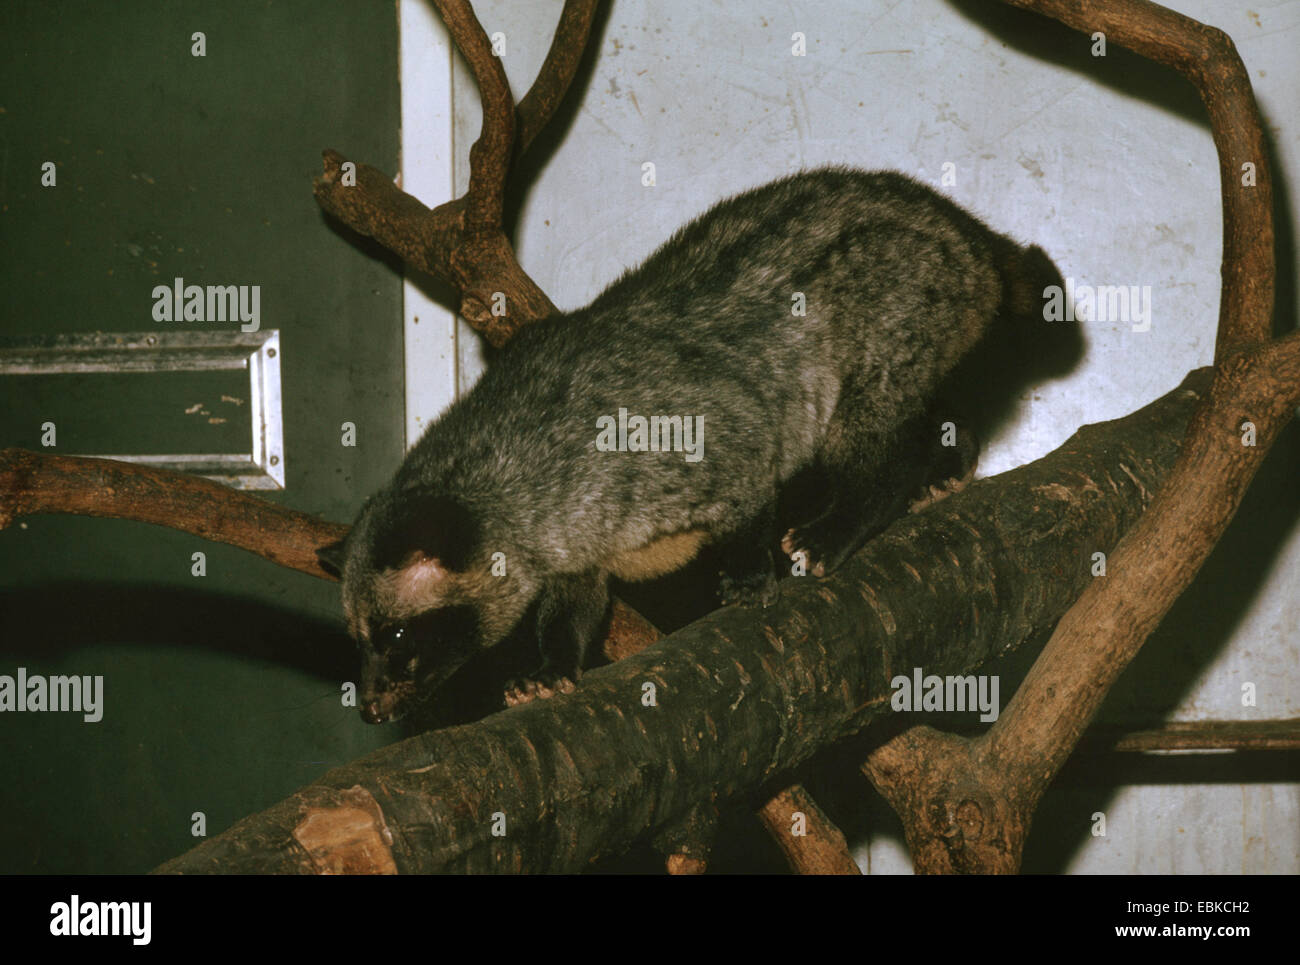 Common palm civet, Asian palm civet (Paradoxurus hermaphroditus), climbing o a branch Stock Photo